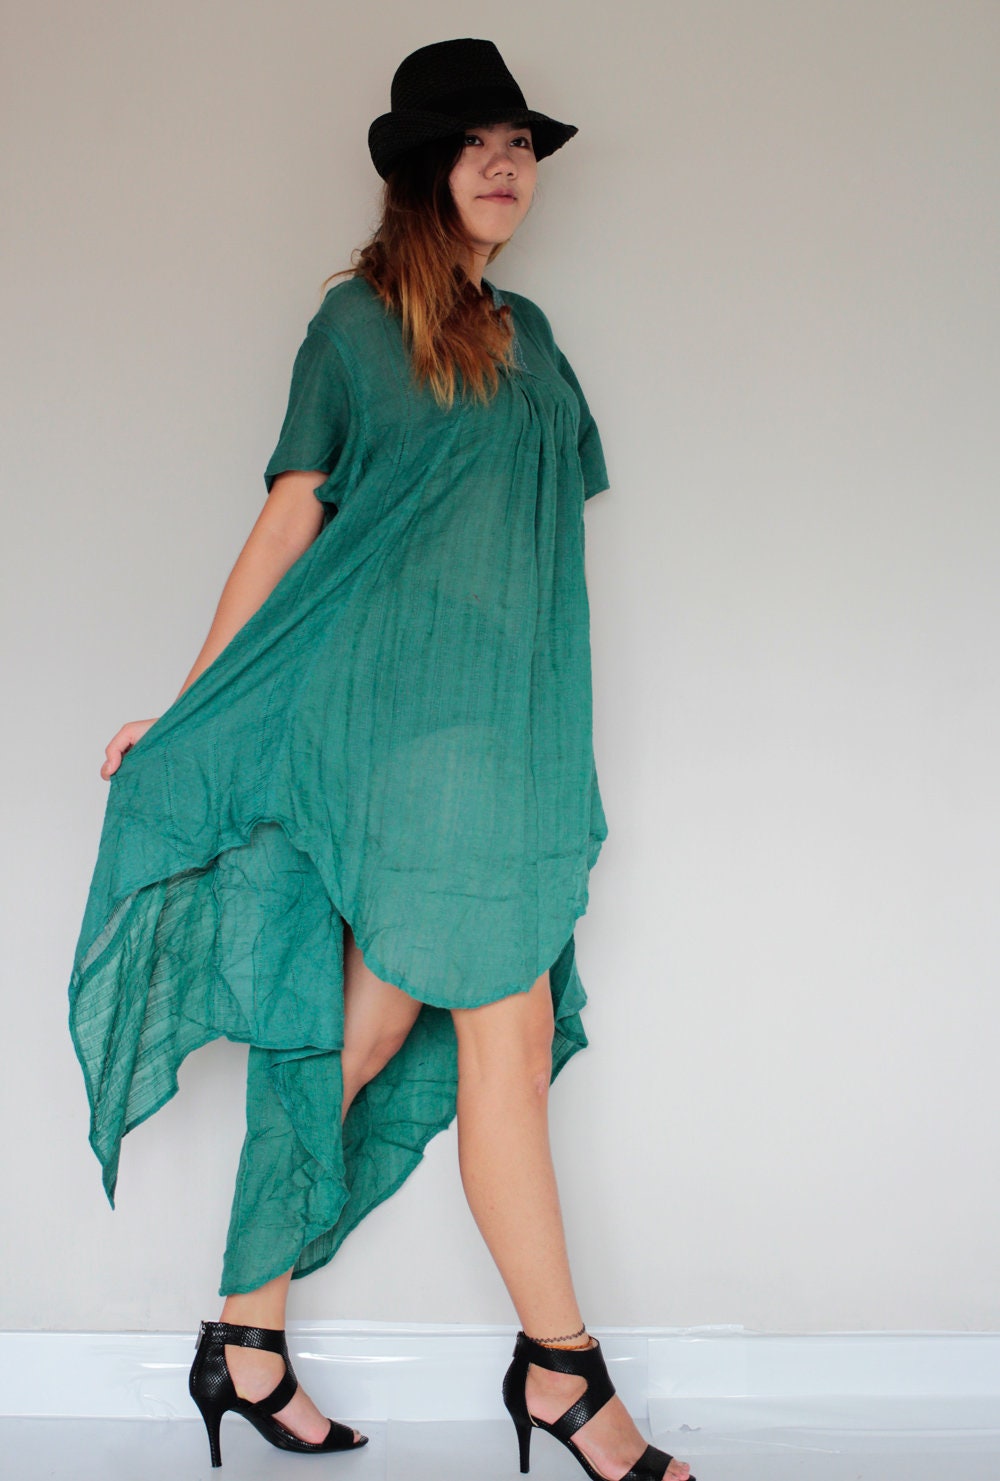 Mini Dress Asymmetric Elegant Length Cotton/linen Dress fit | Etsy